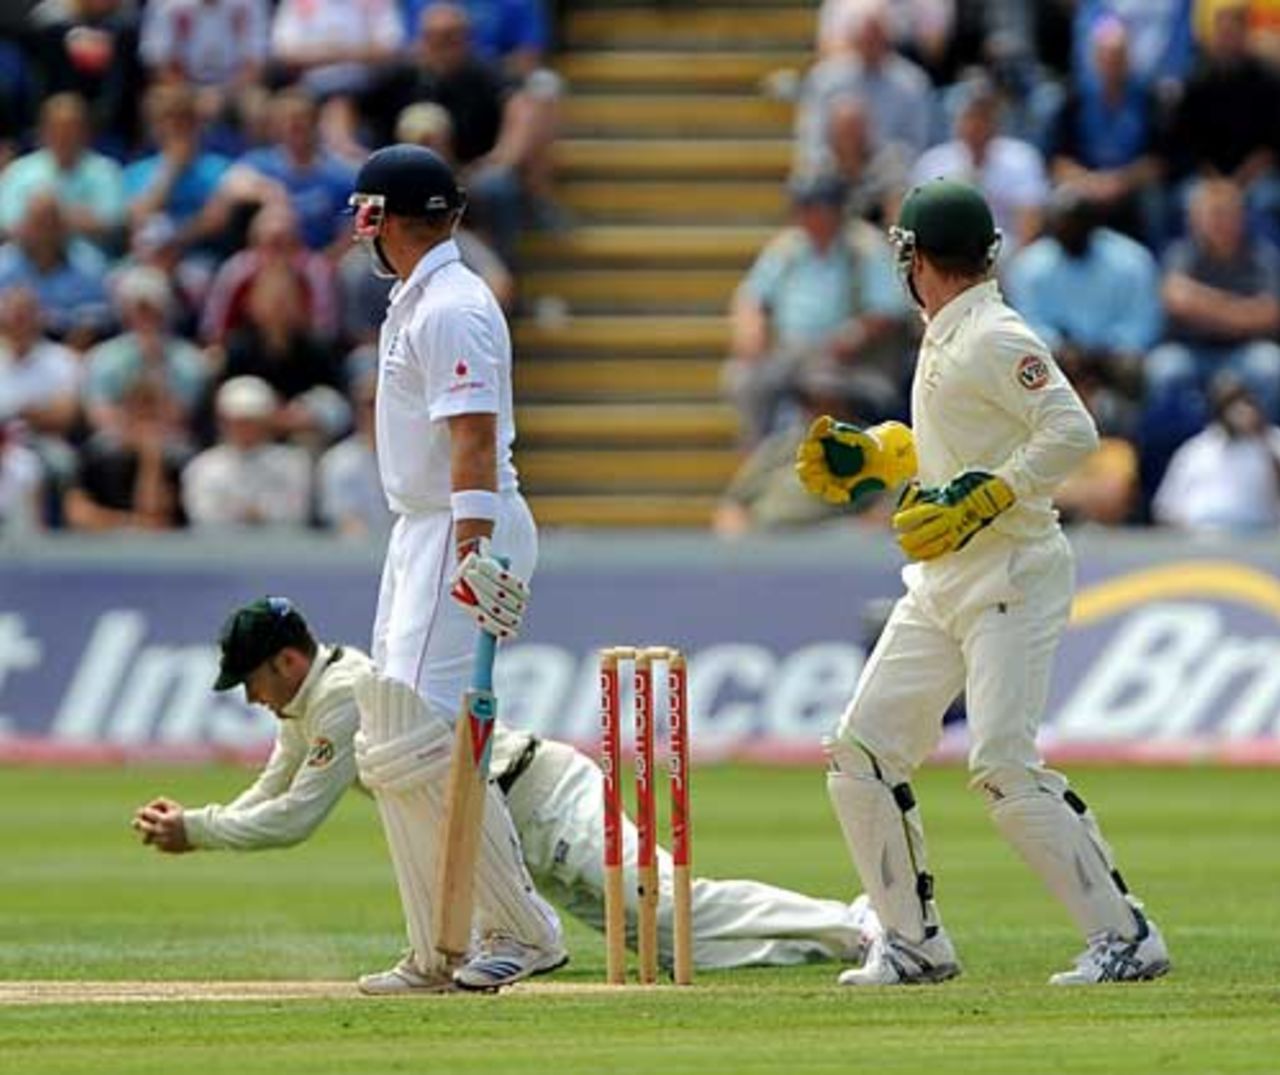 Matt Prior lobs a catch to Michael Clarke at slip, England v Australia, 1st Test, Cardiff, 5th day, July 12, 2009